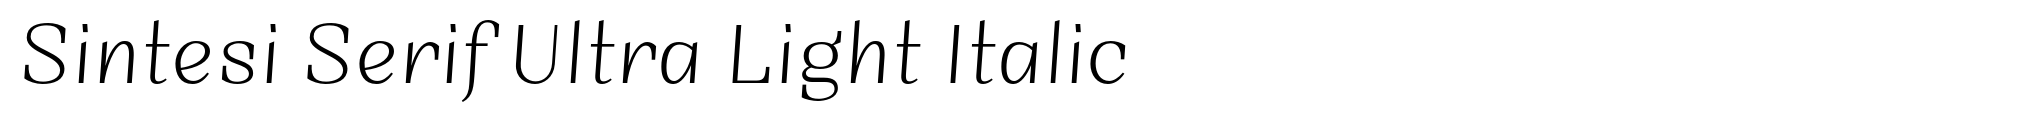 Sintesi Serif Ultra Light Italic image